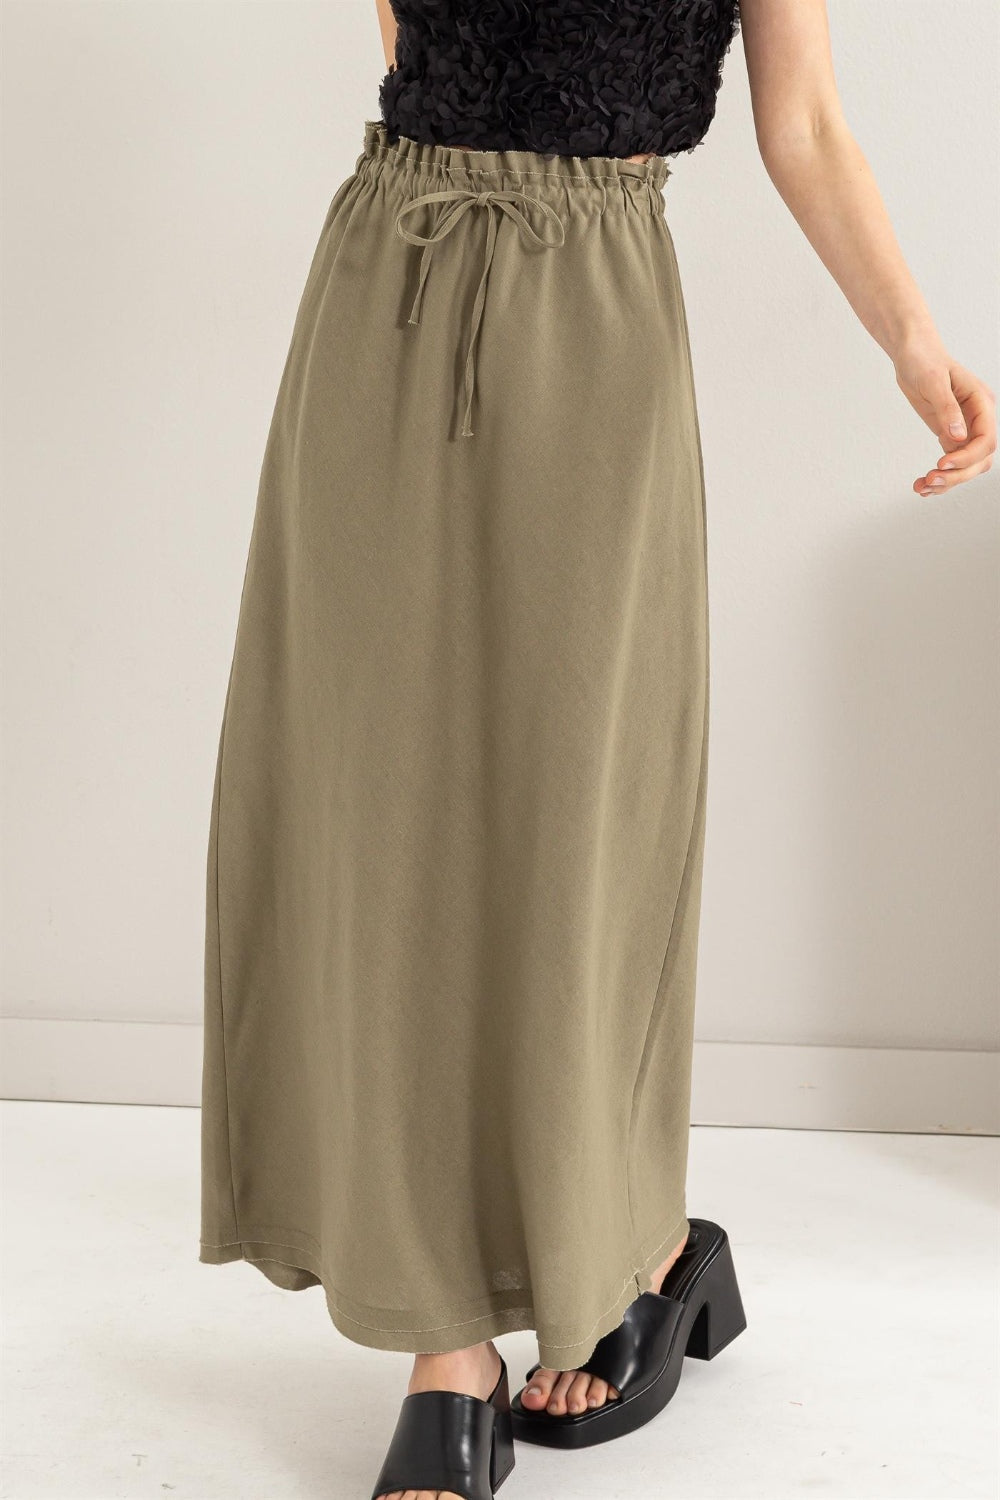 Olive Green Drawstring Washed Linen Maxi Skirt - Tigbul's Variety Fashion Shop